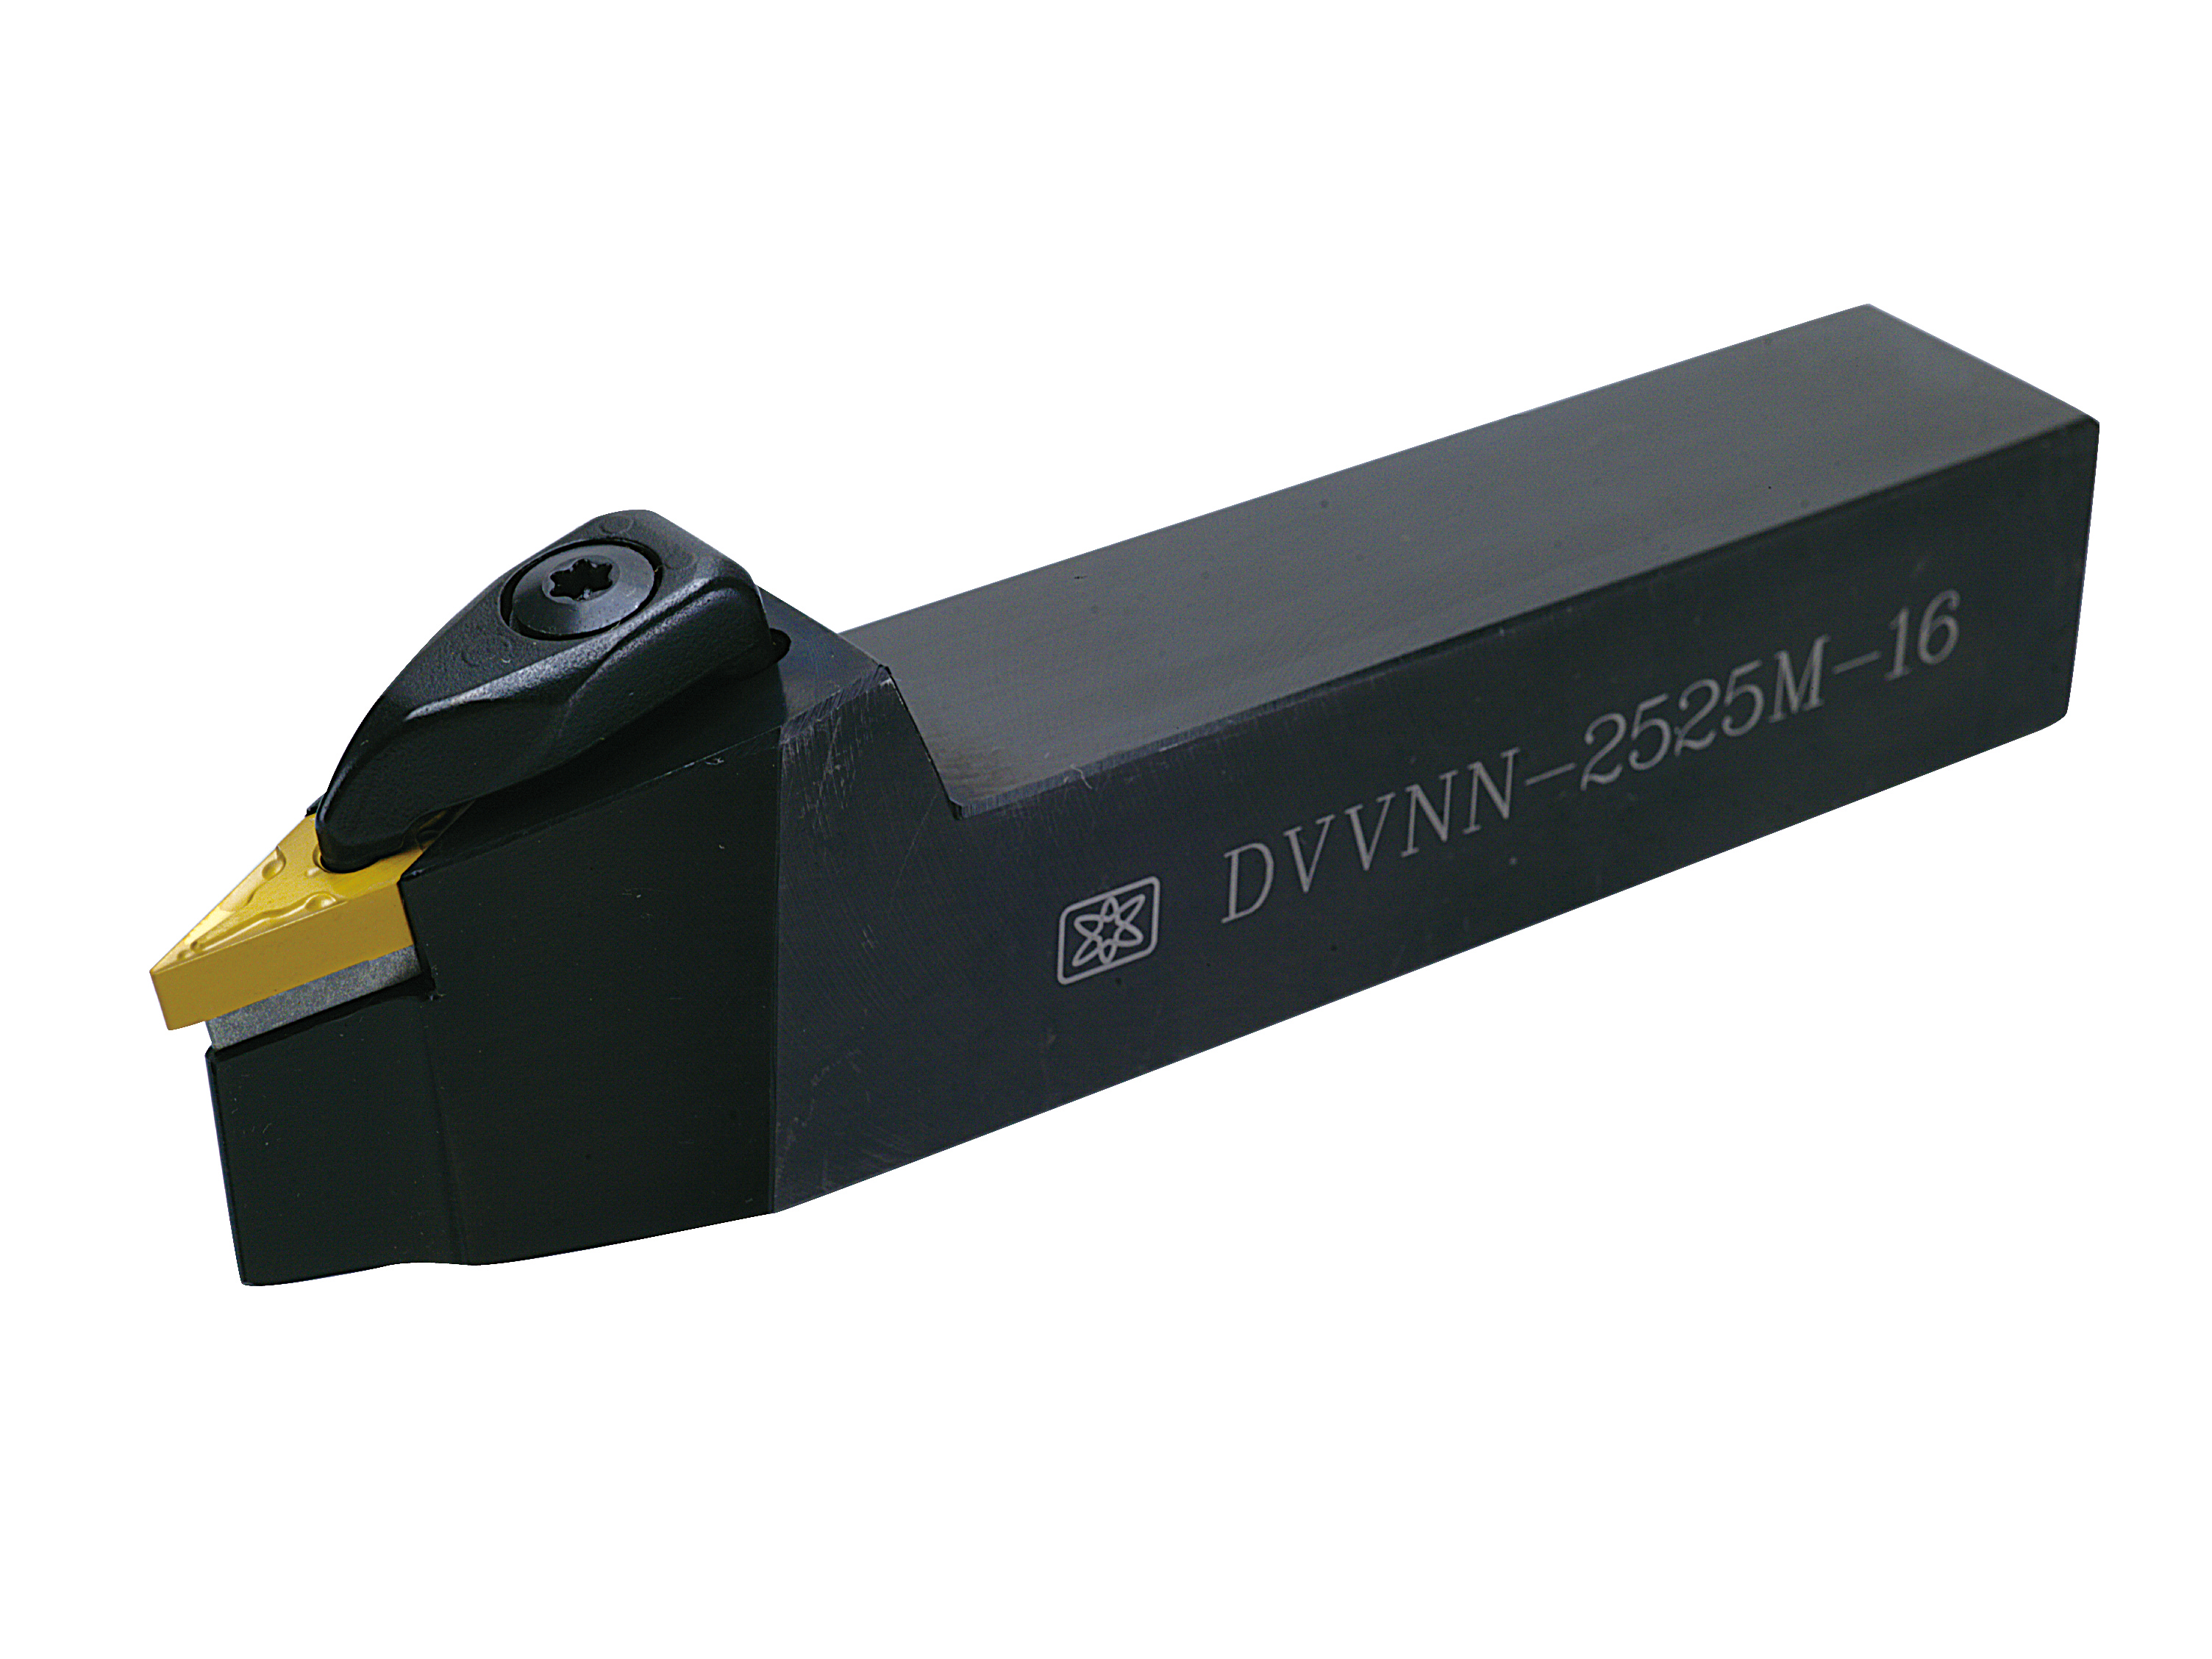 Products|DVVNN (VNMG1604) External Turning Tool Holder